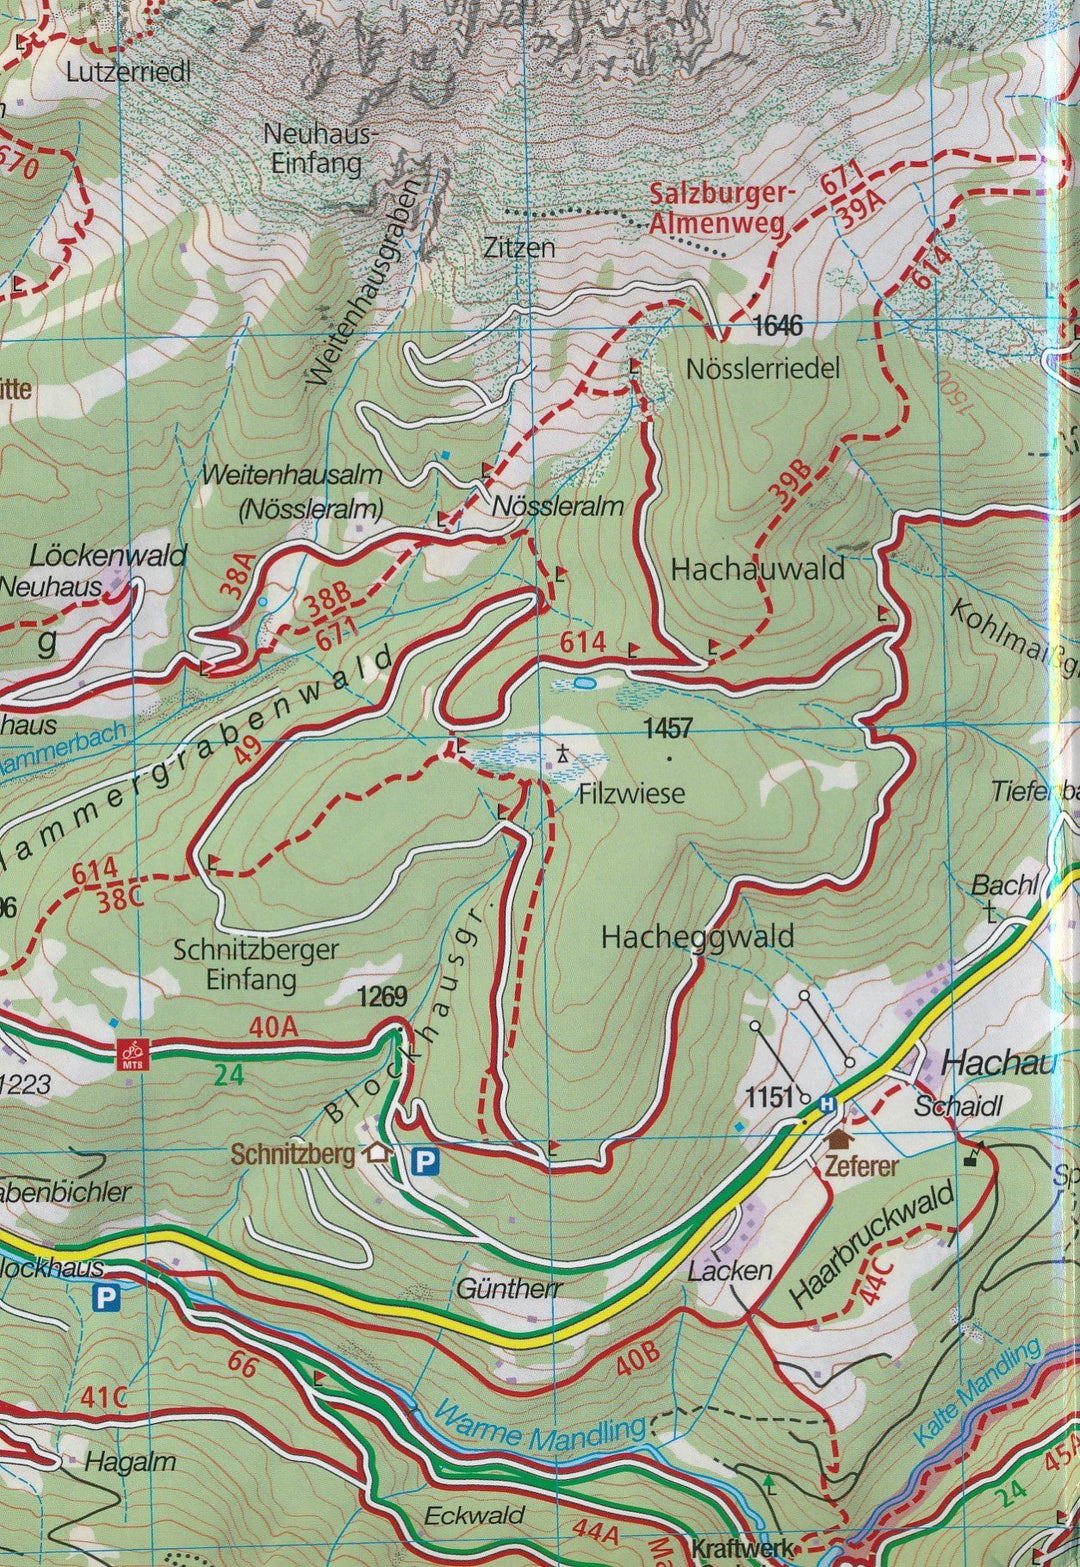 Carte de randonnée n° 077 - Ortles, Cevedale, Suldental, Valfurva (Italie) | Kompass carte pliée Kompass 